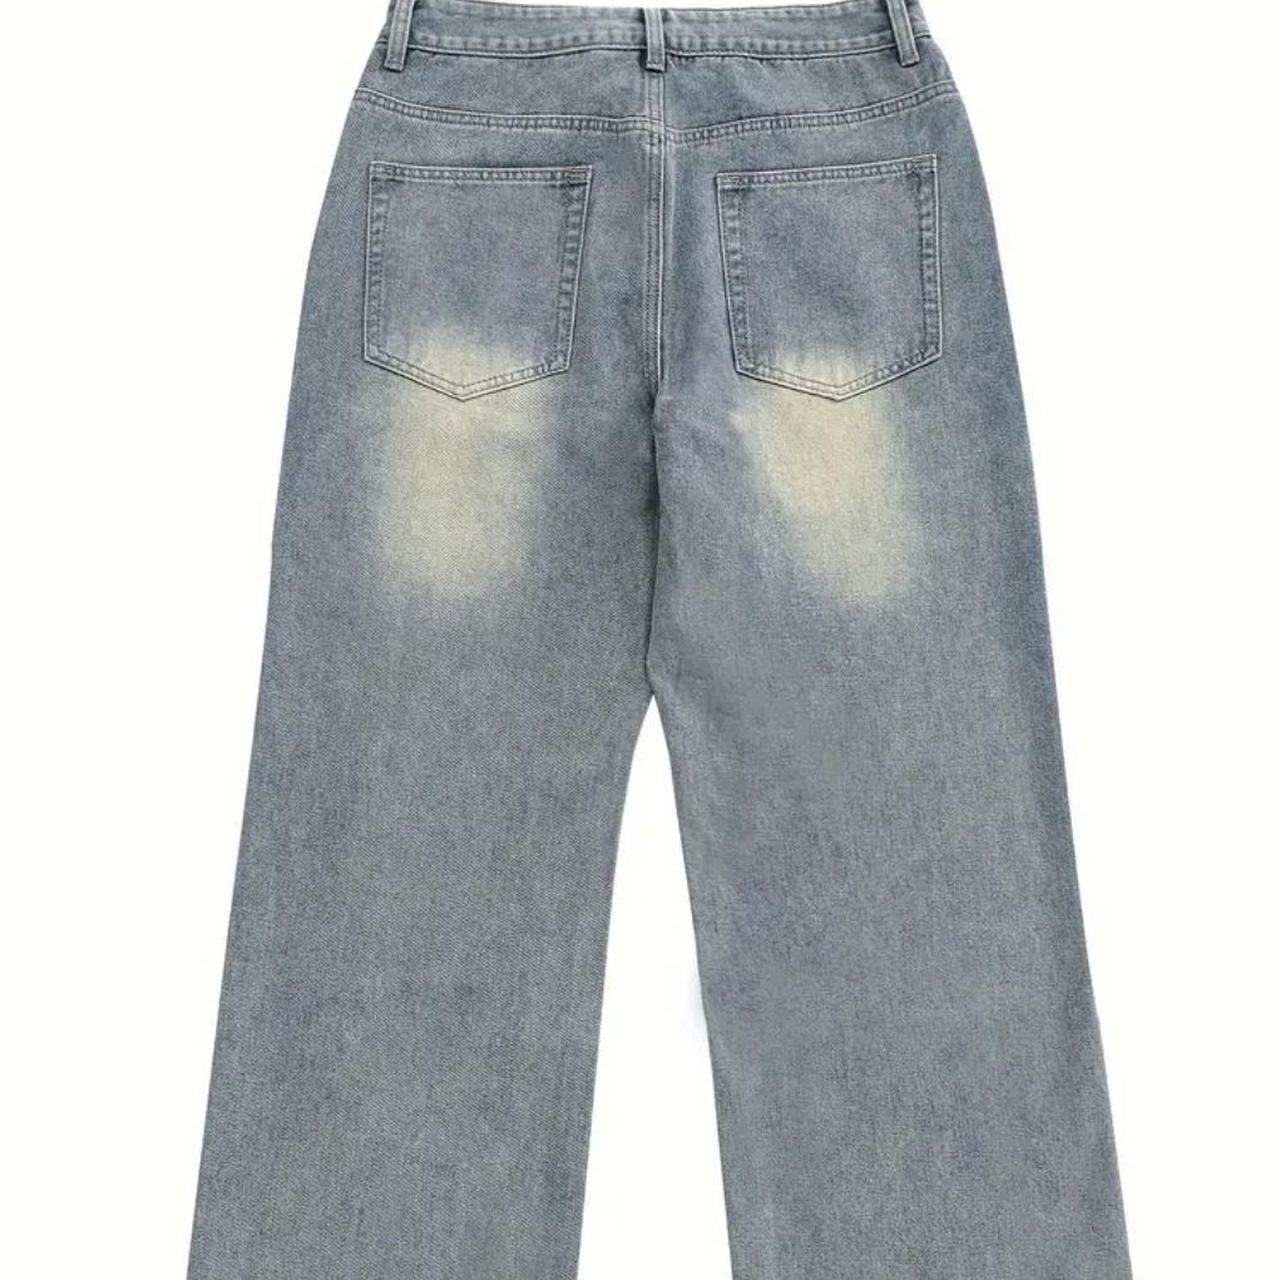 Men's Casual Hip Hop Style Distressed Jeans, Street... - Depop